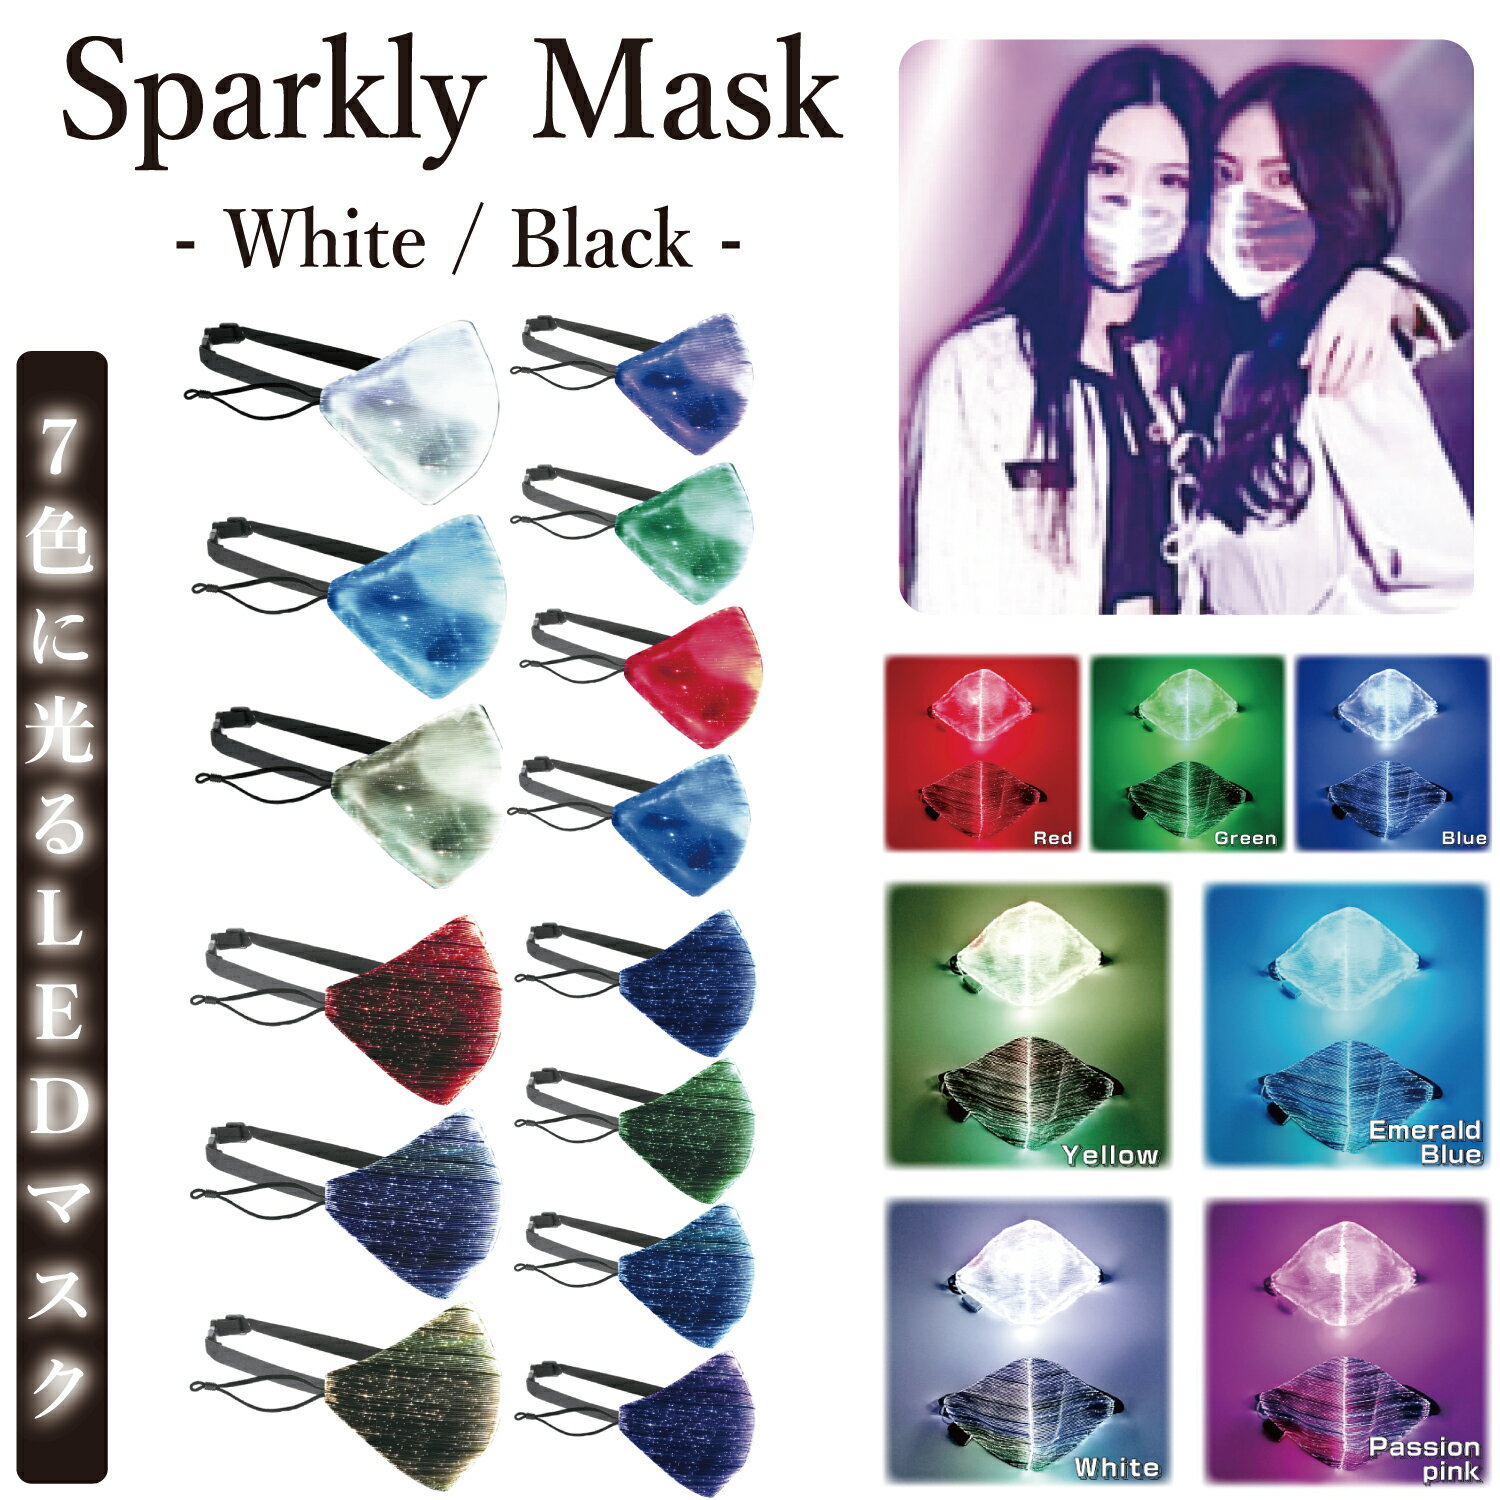 Sparkly Mask White スパークリーマスク 白 / 黒 7色に 光るマスク LED マスク おもしろ グッズ 誕生日グッズ パーティーグッズ 日本語説明書兼保証書付き 男女兼用 USB充電式